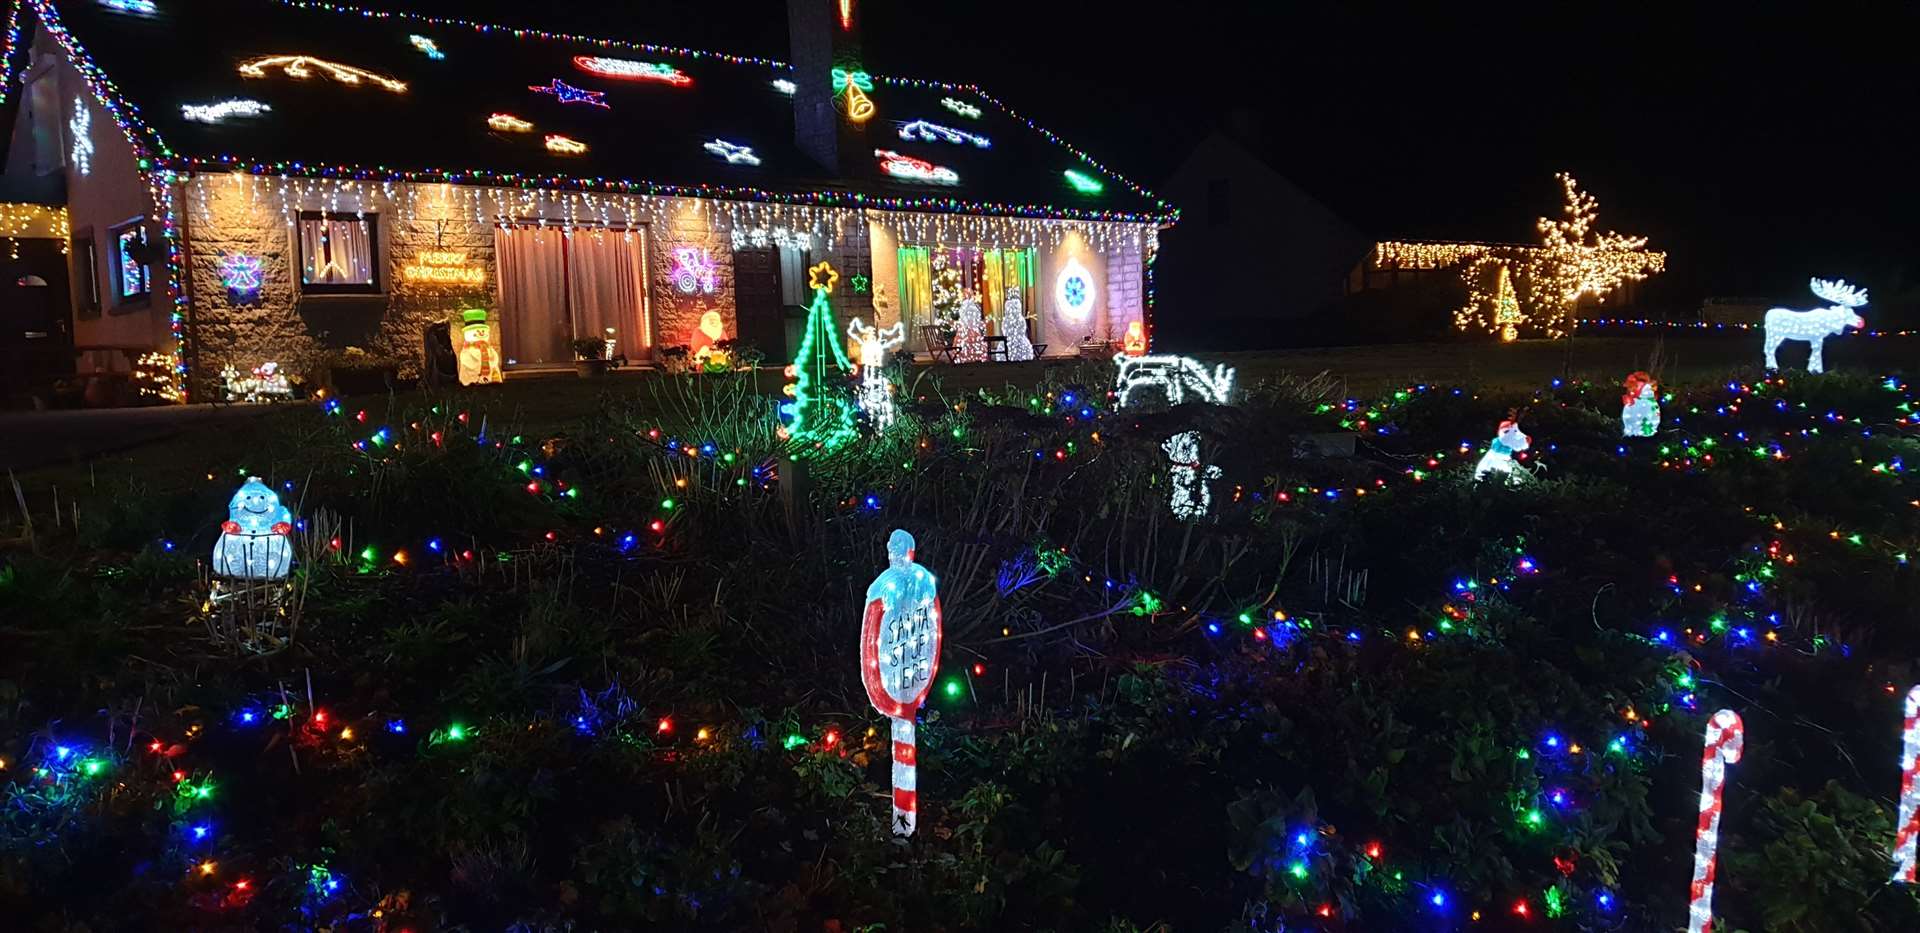 Callum Stuart's festive illuminations lighting up his house last year.